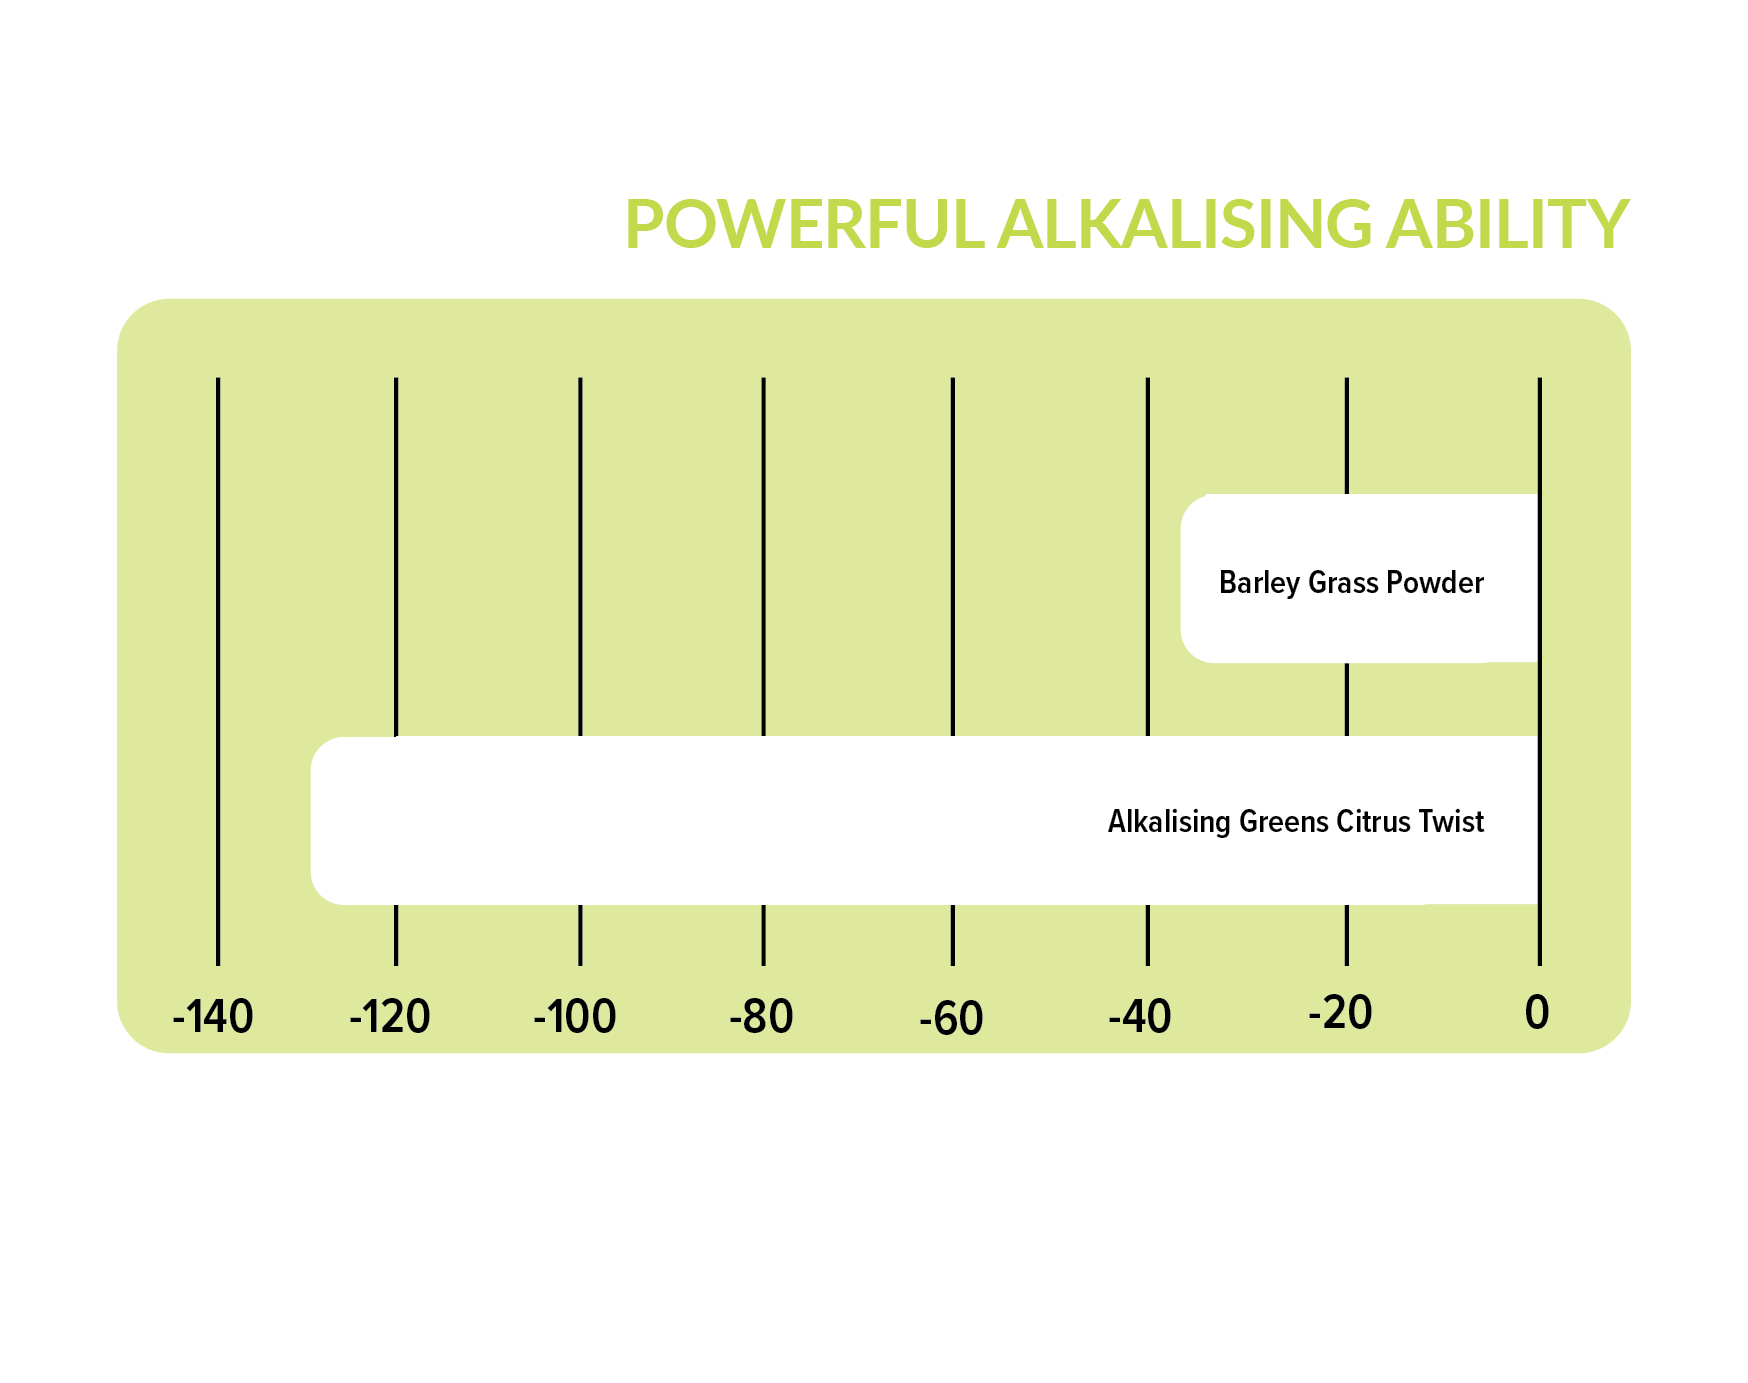 Alkalising Greens® Citrus Twist alkalising ability comparison graph, compared to Barley Grass Powder